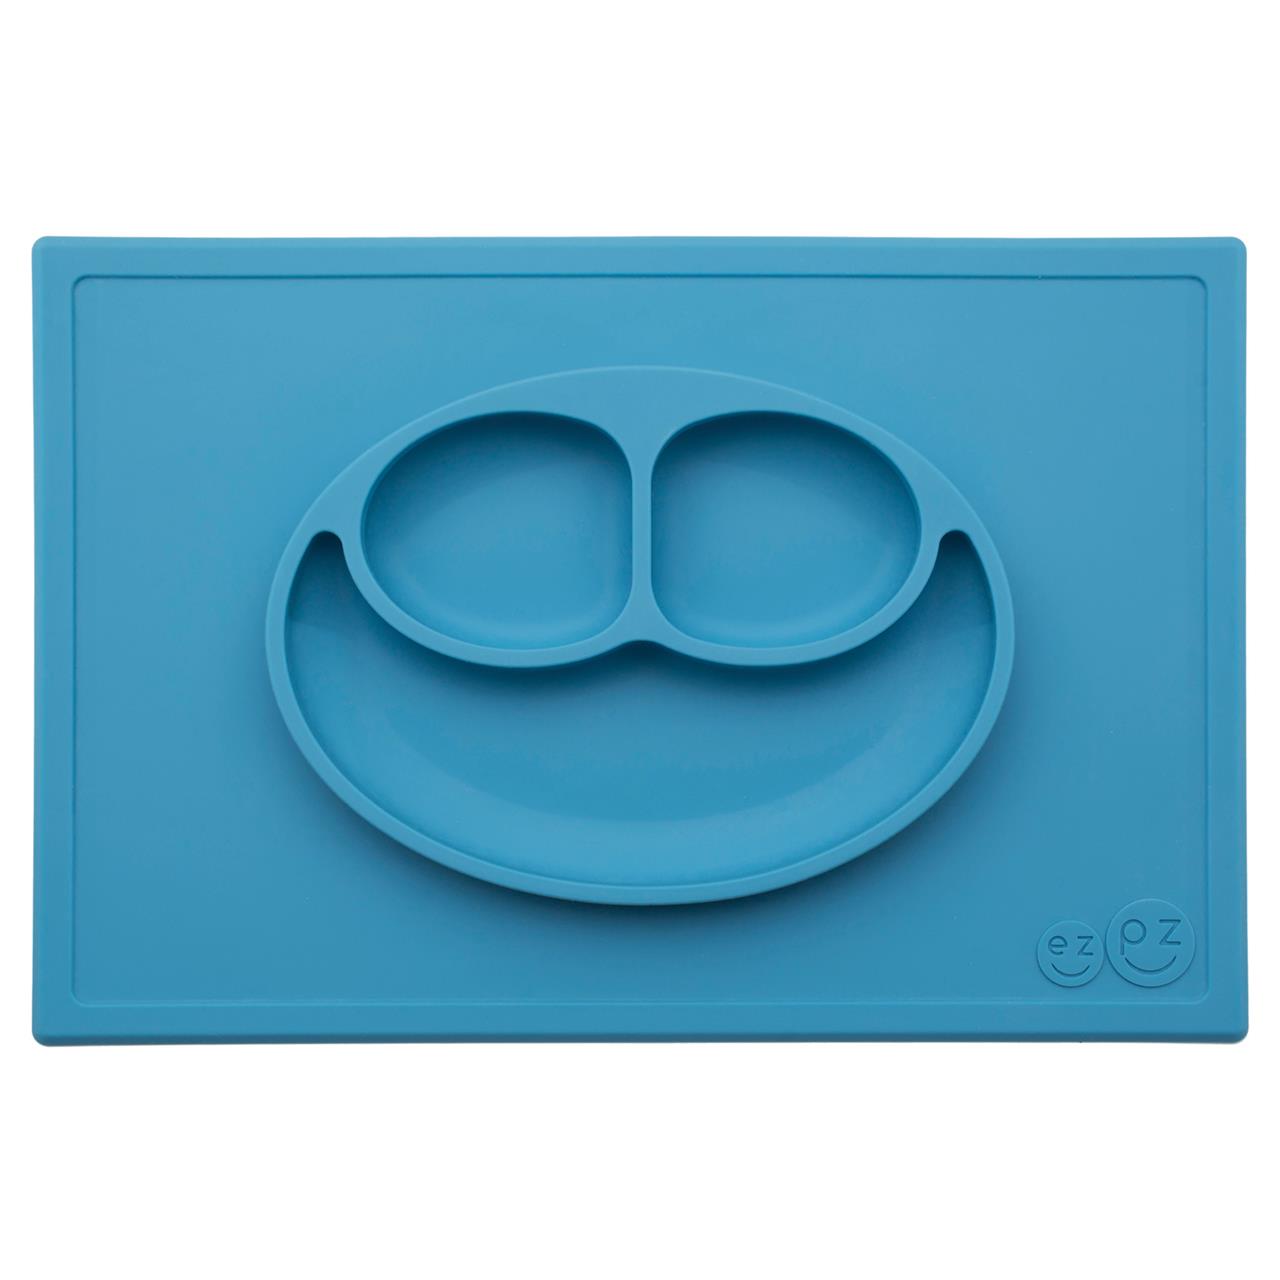 EZPZ Happy Mat blue